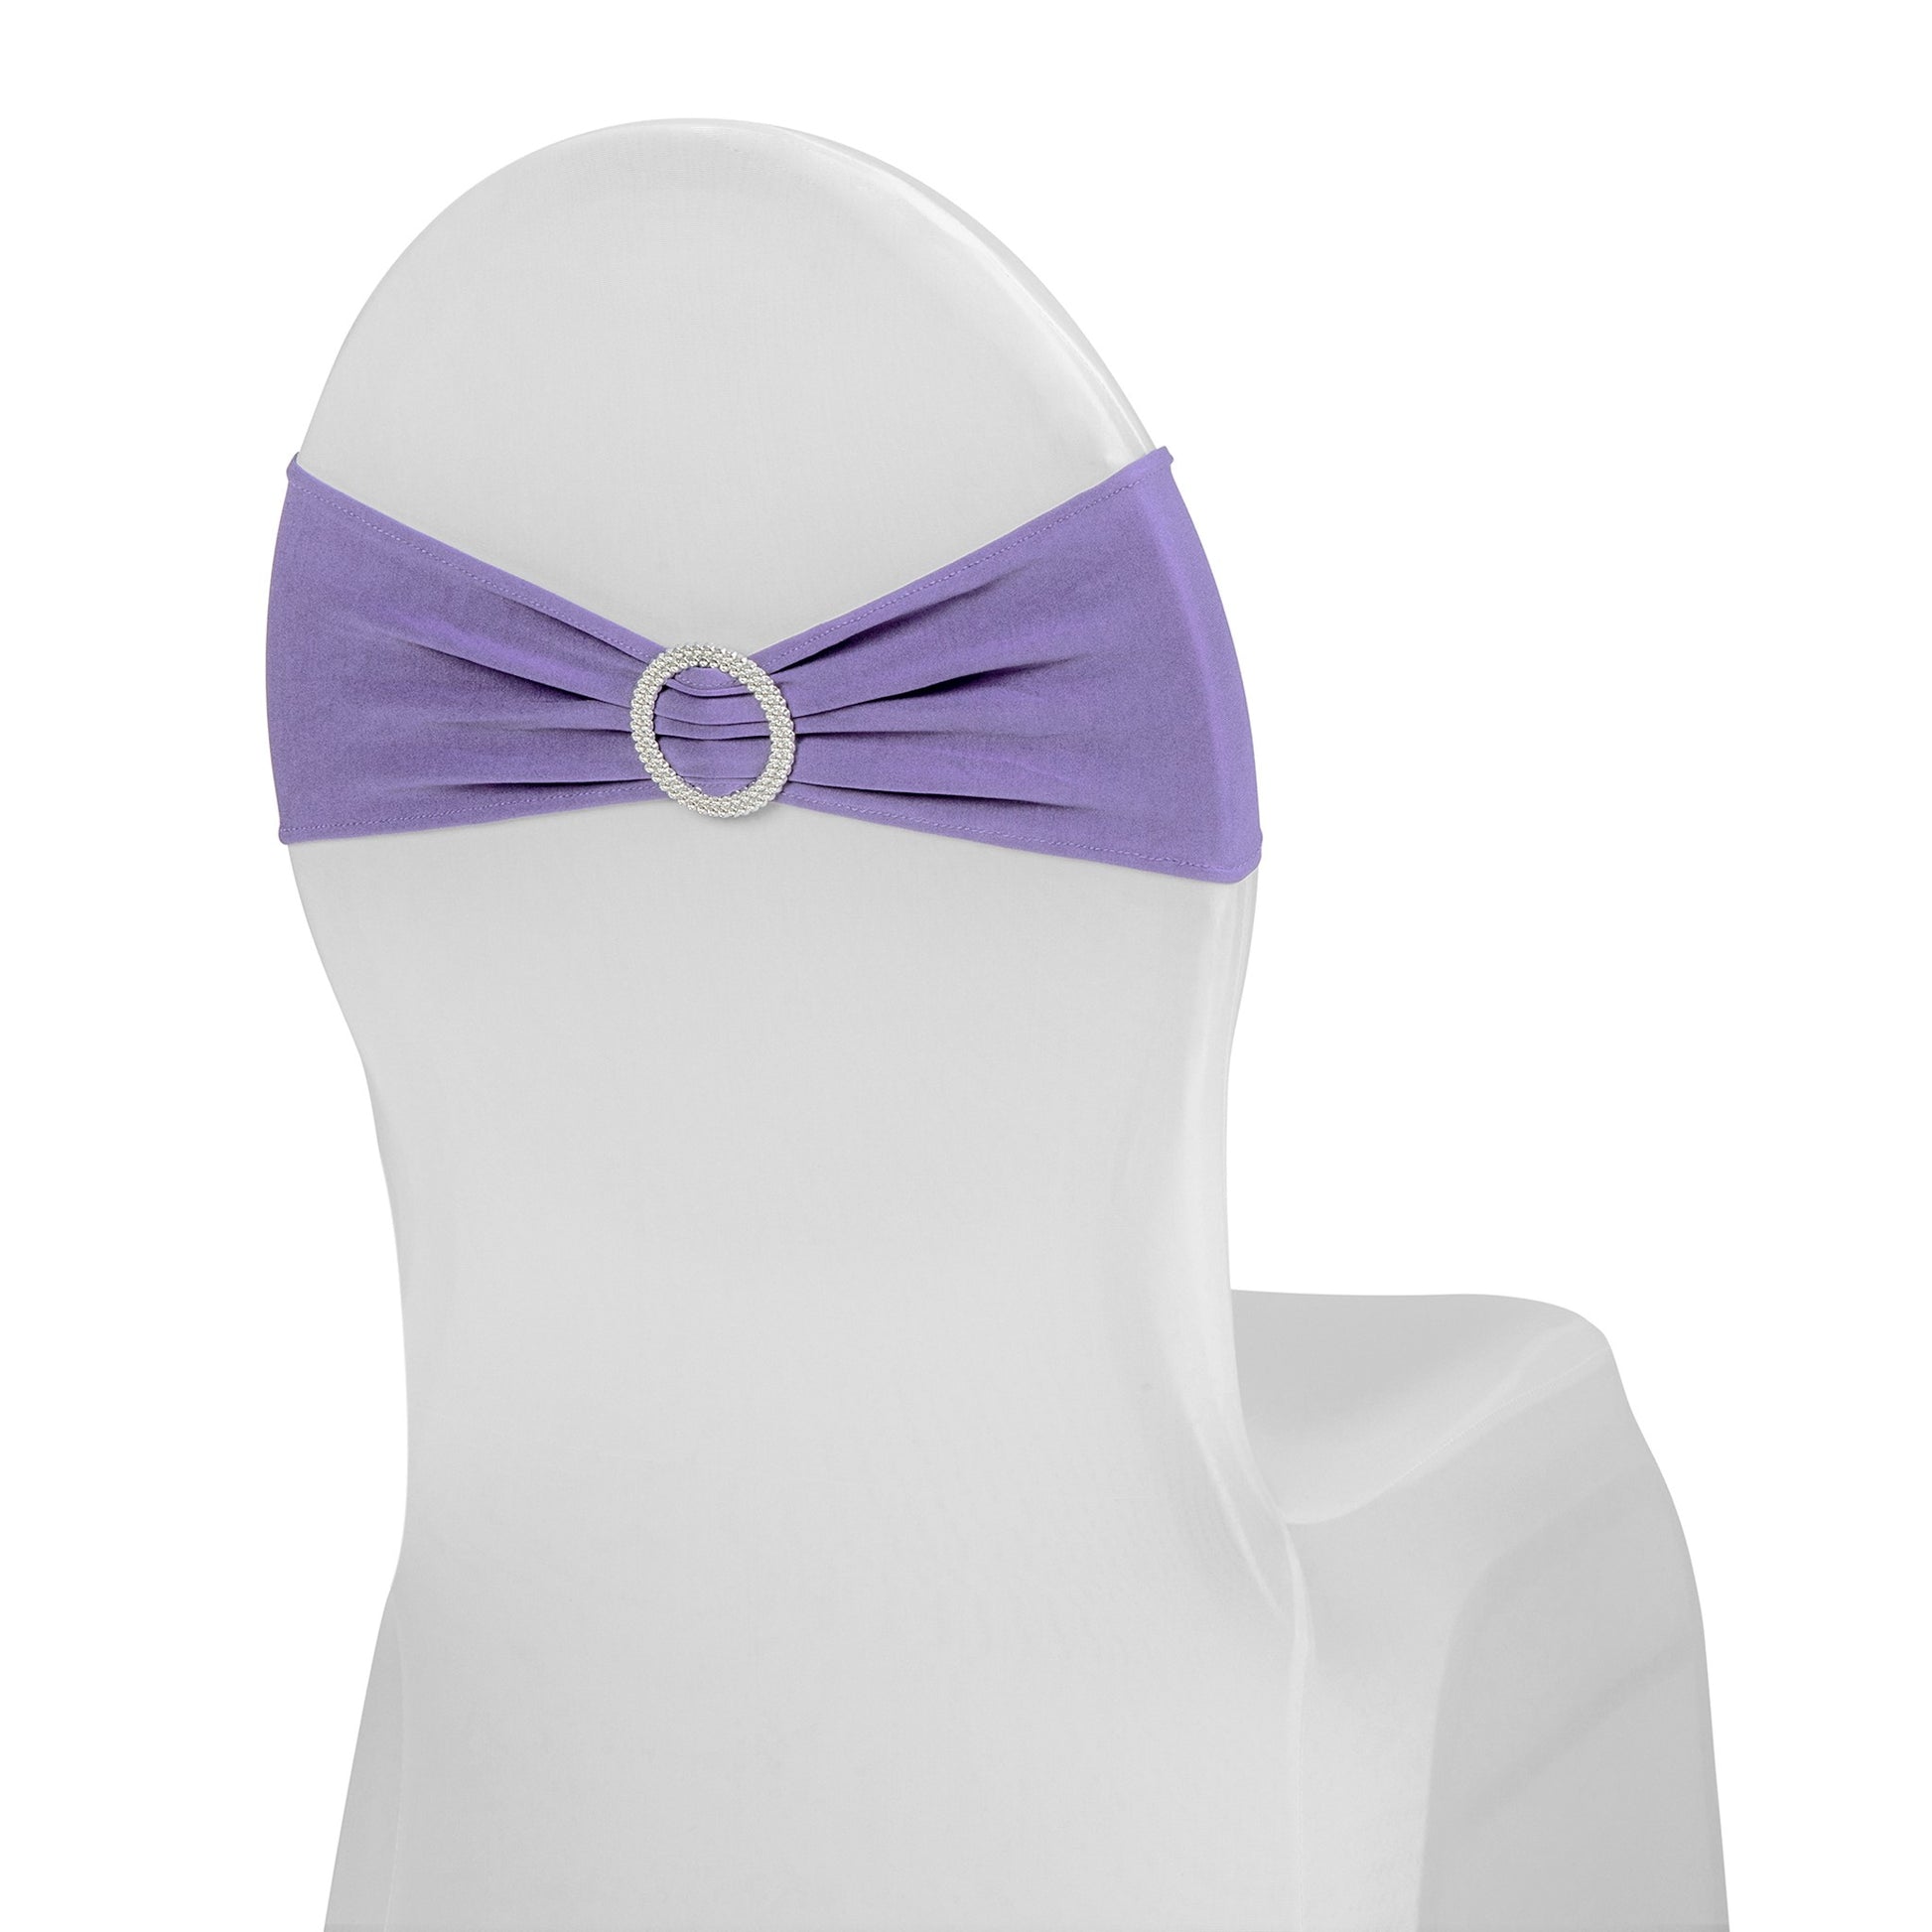 Buckle Spandex Stretch Chair Band - Lavender